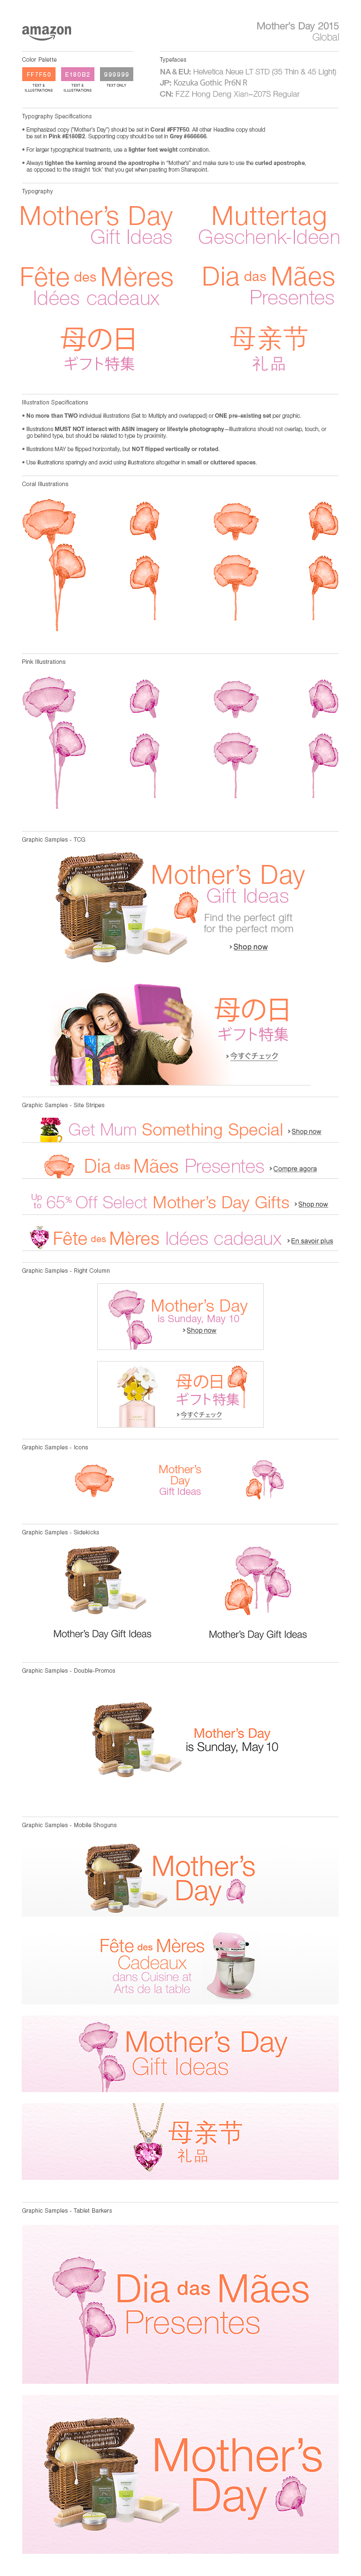 2015_mothers-day_styleguide.jpg